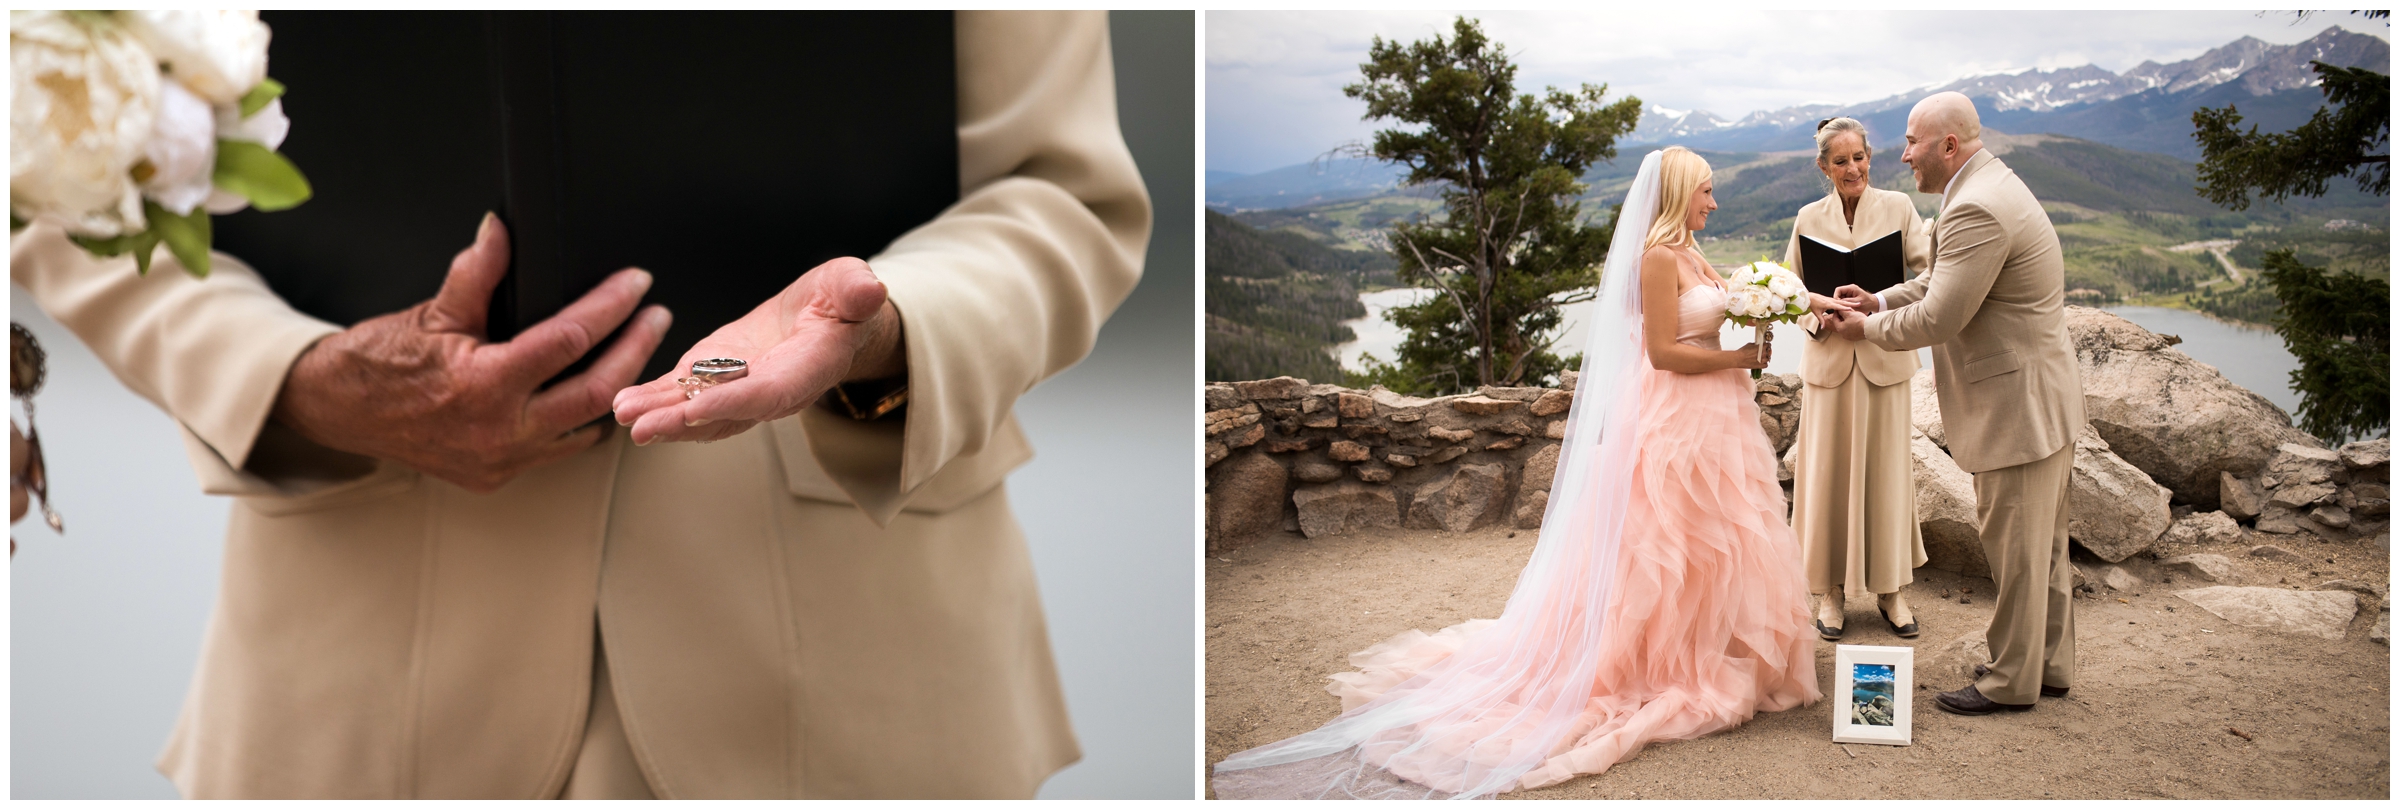 Ring ceremony during Colorado mountain elopement in Breckenridge 